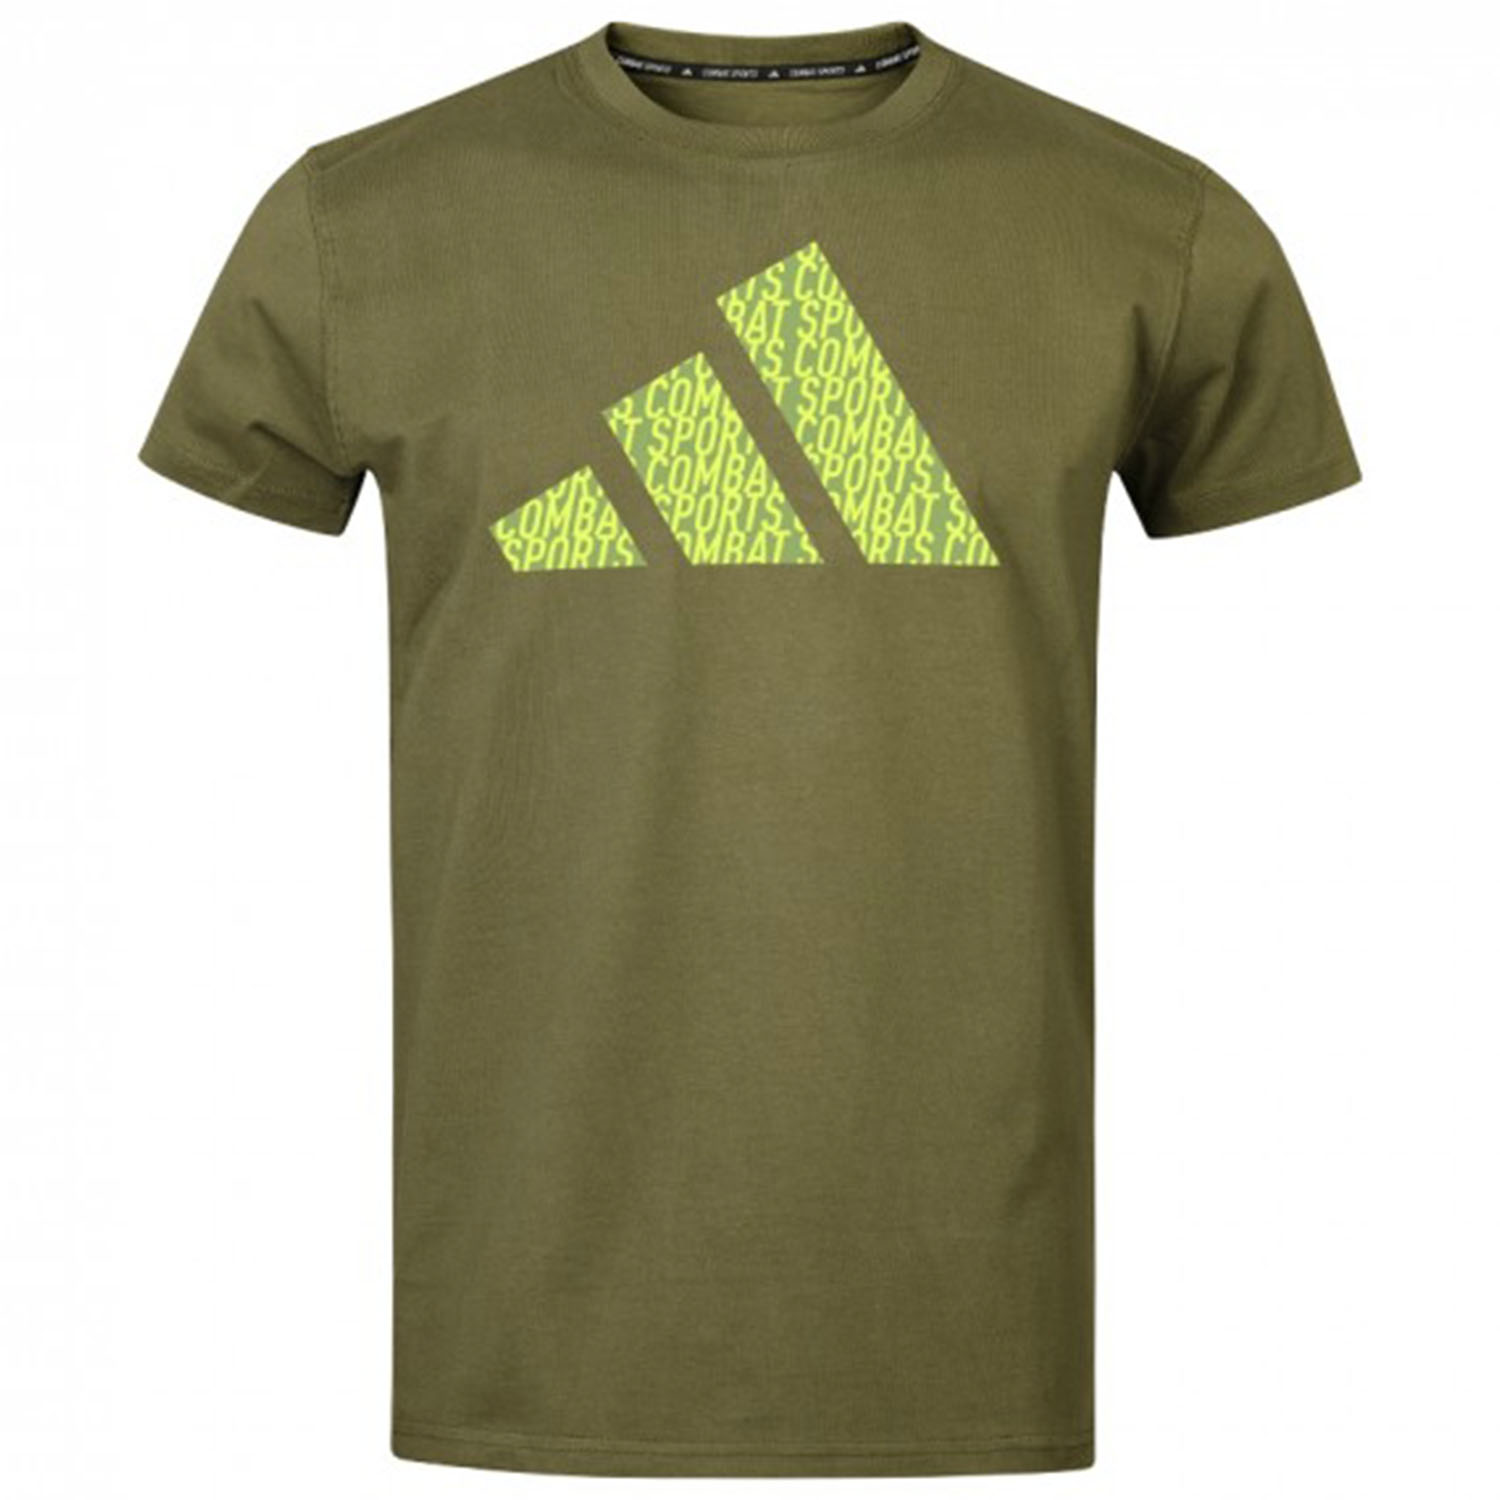 adidas T-Shirt, Perfo Script Graphic Combat Sports, olive